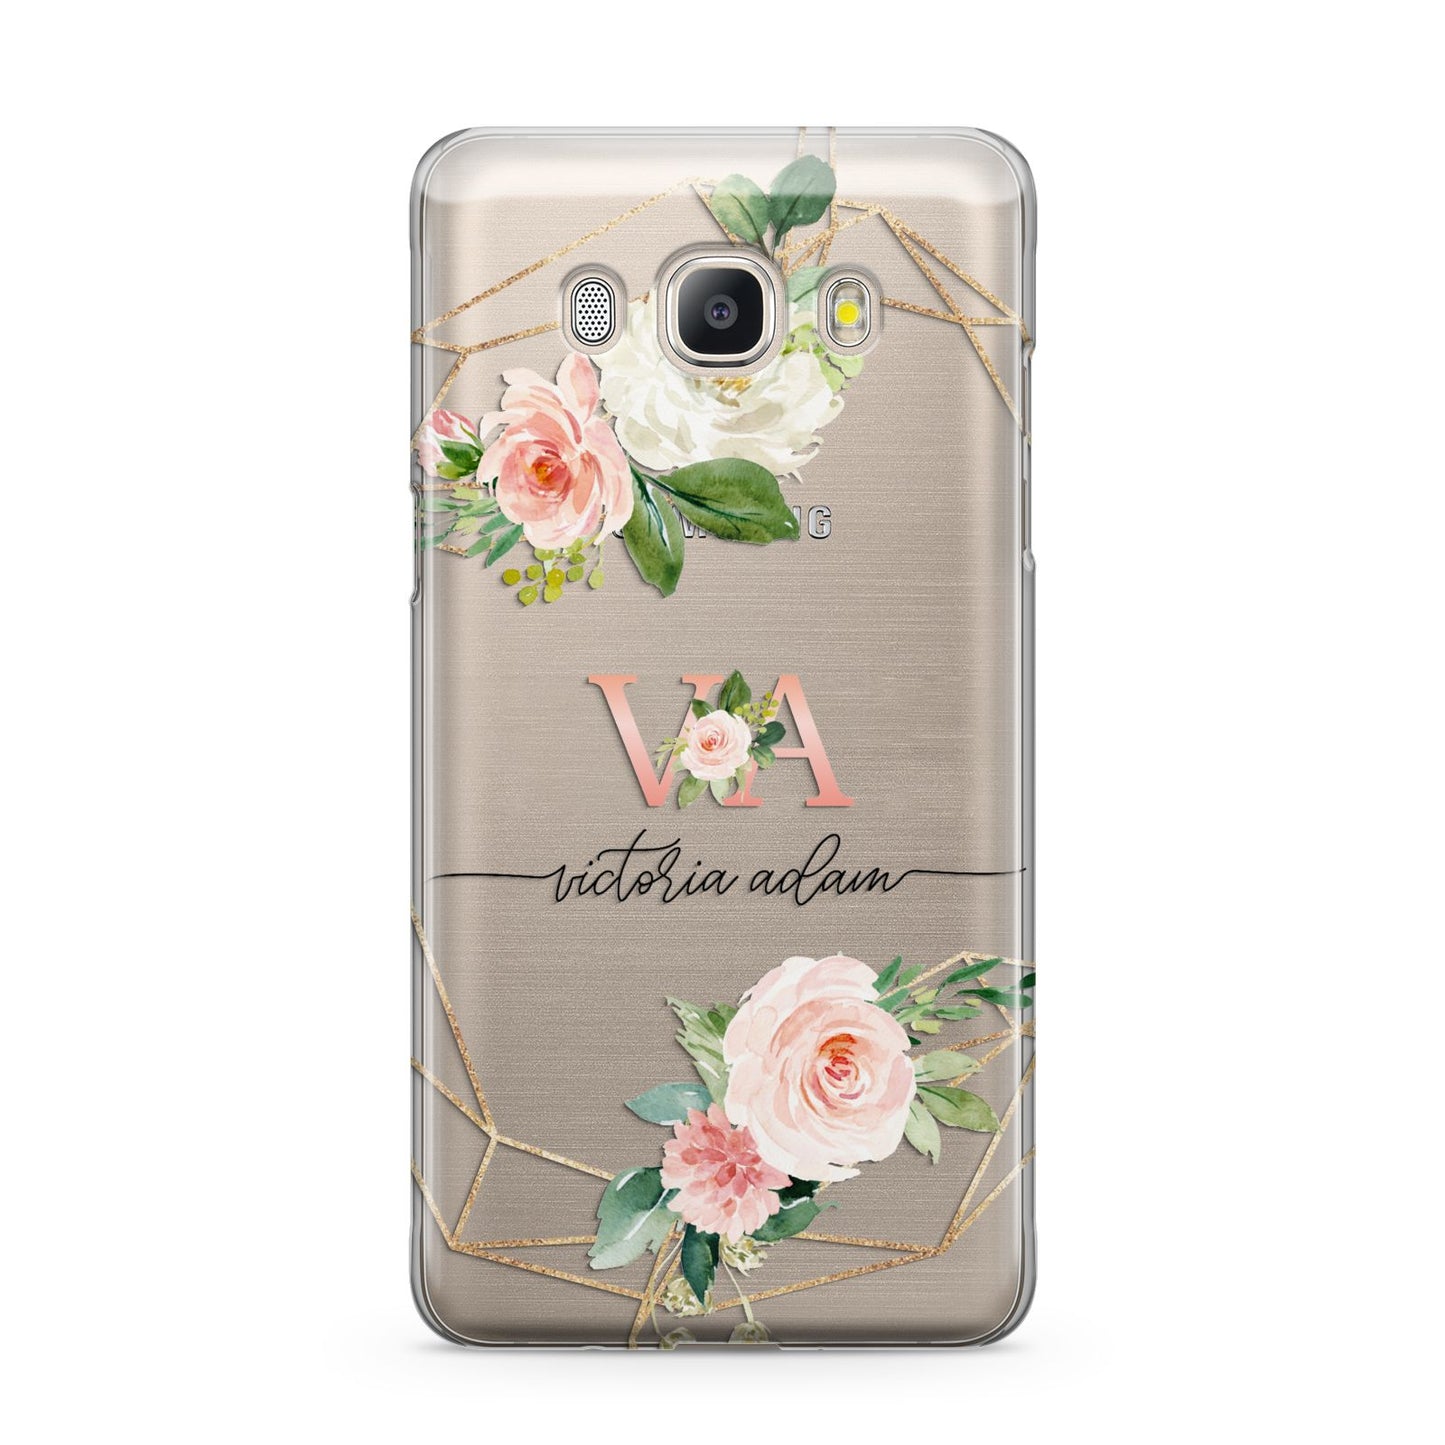 Blush Pink Rose Floral Personalised Samsung Galaxy J5 2016 Case